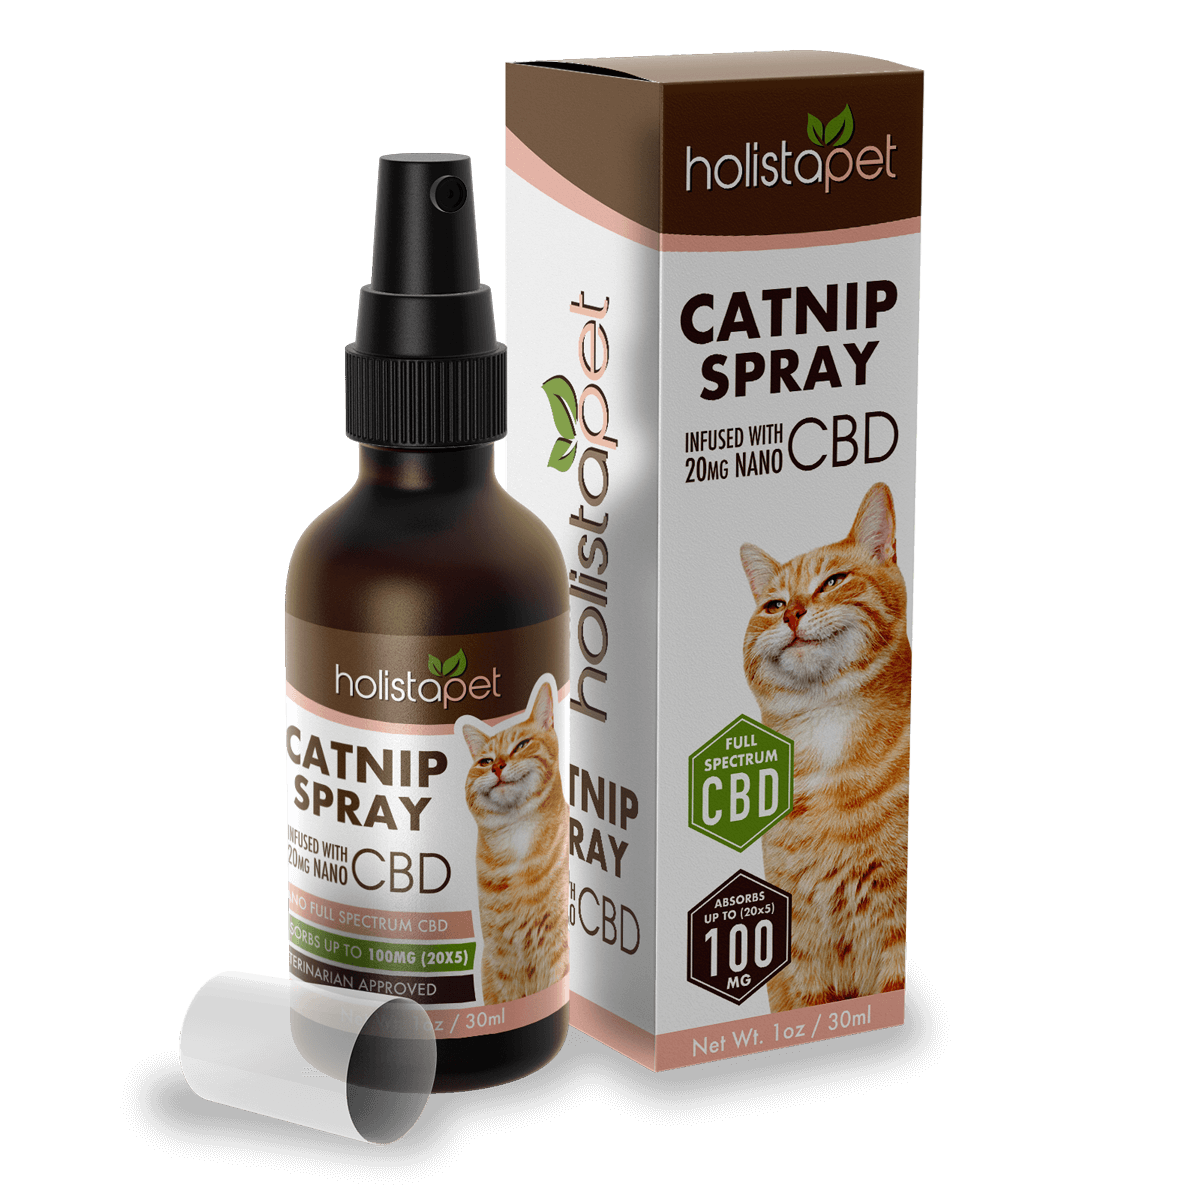 Holistapet Catnip Spray with CBD Review